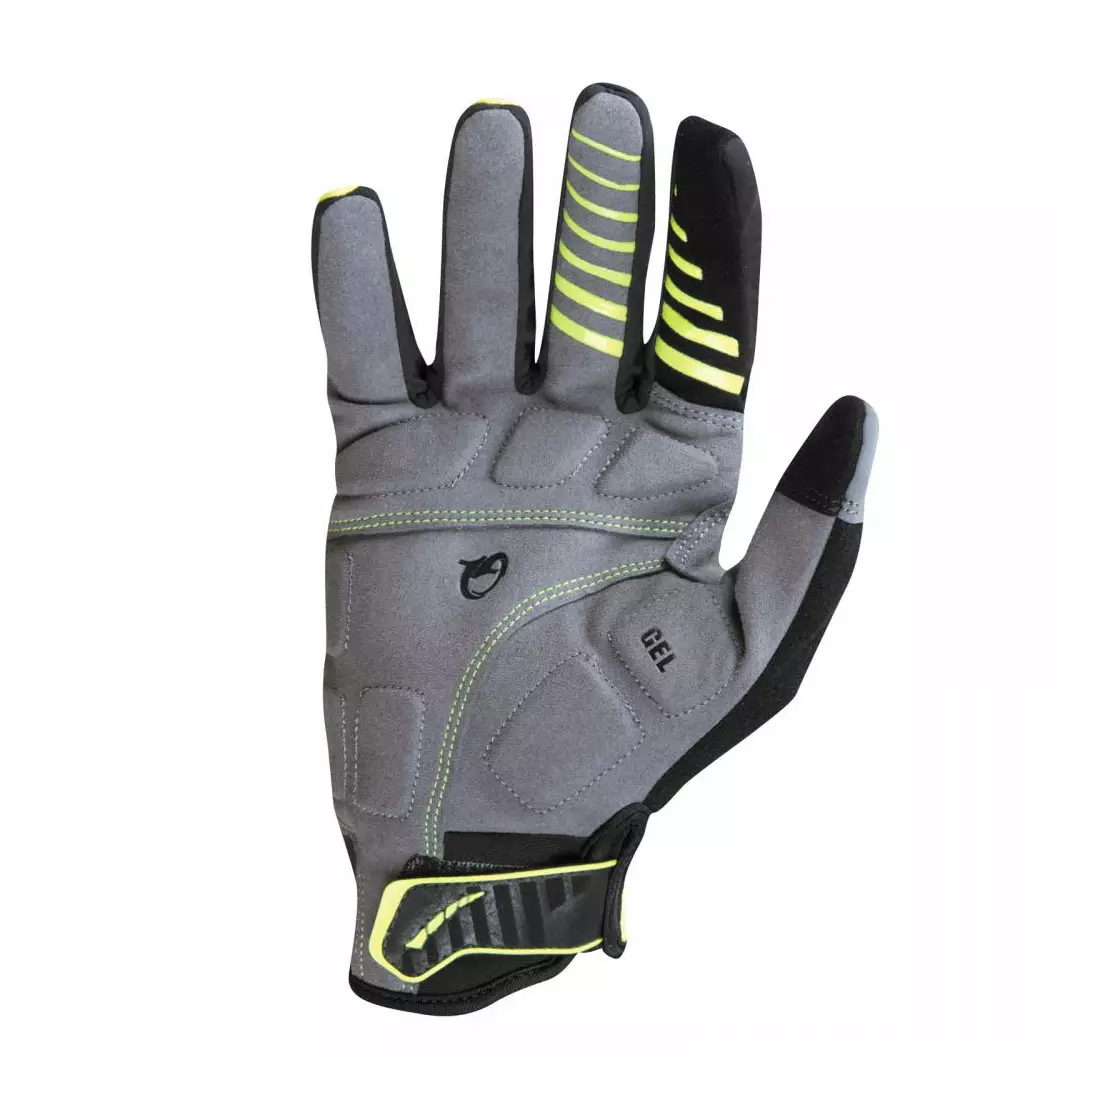 PEARL IZUMI ELITE Cyclone Gel Glove 14141407-428 - men's cycling gloves